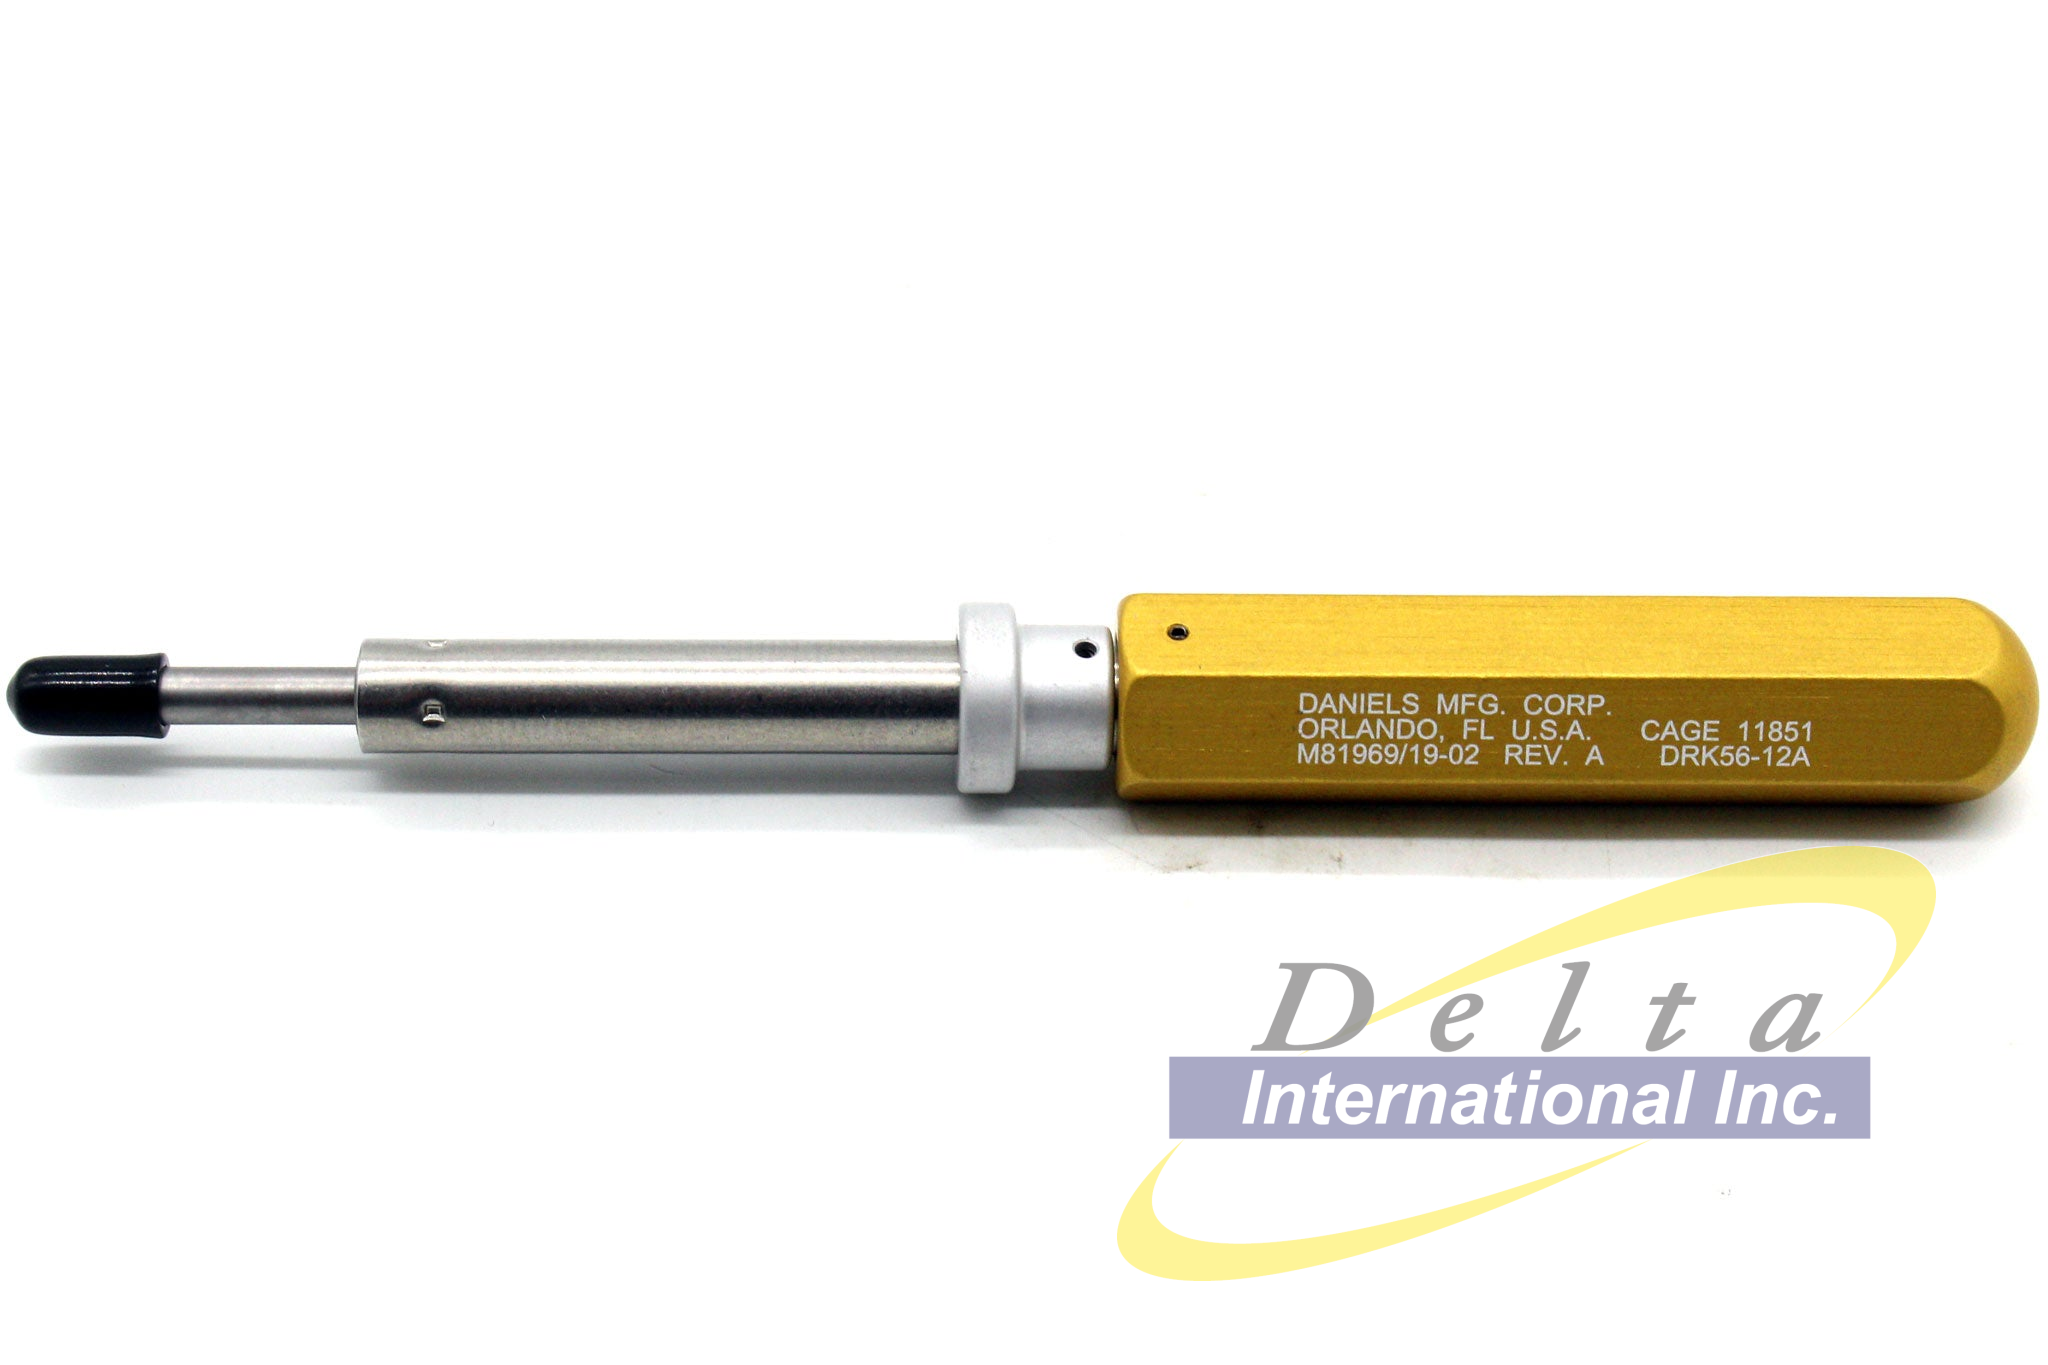 DMC DRK56-12A - Removal Tool M81969/19-02